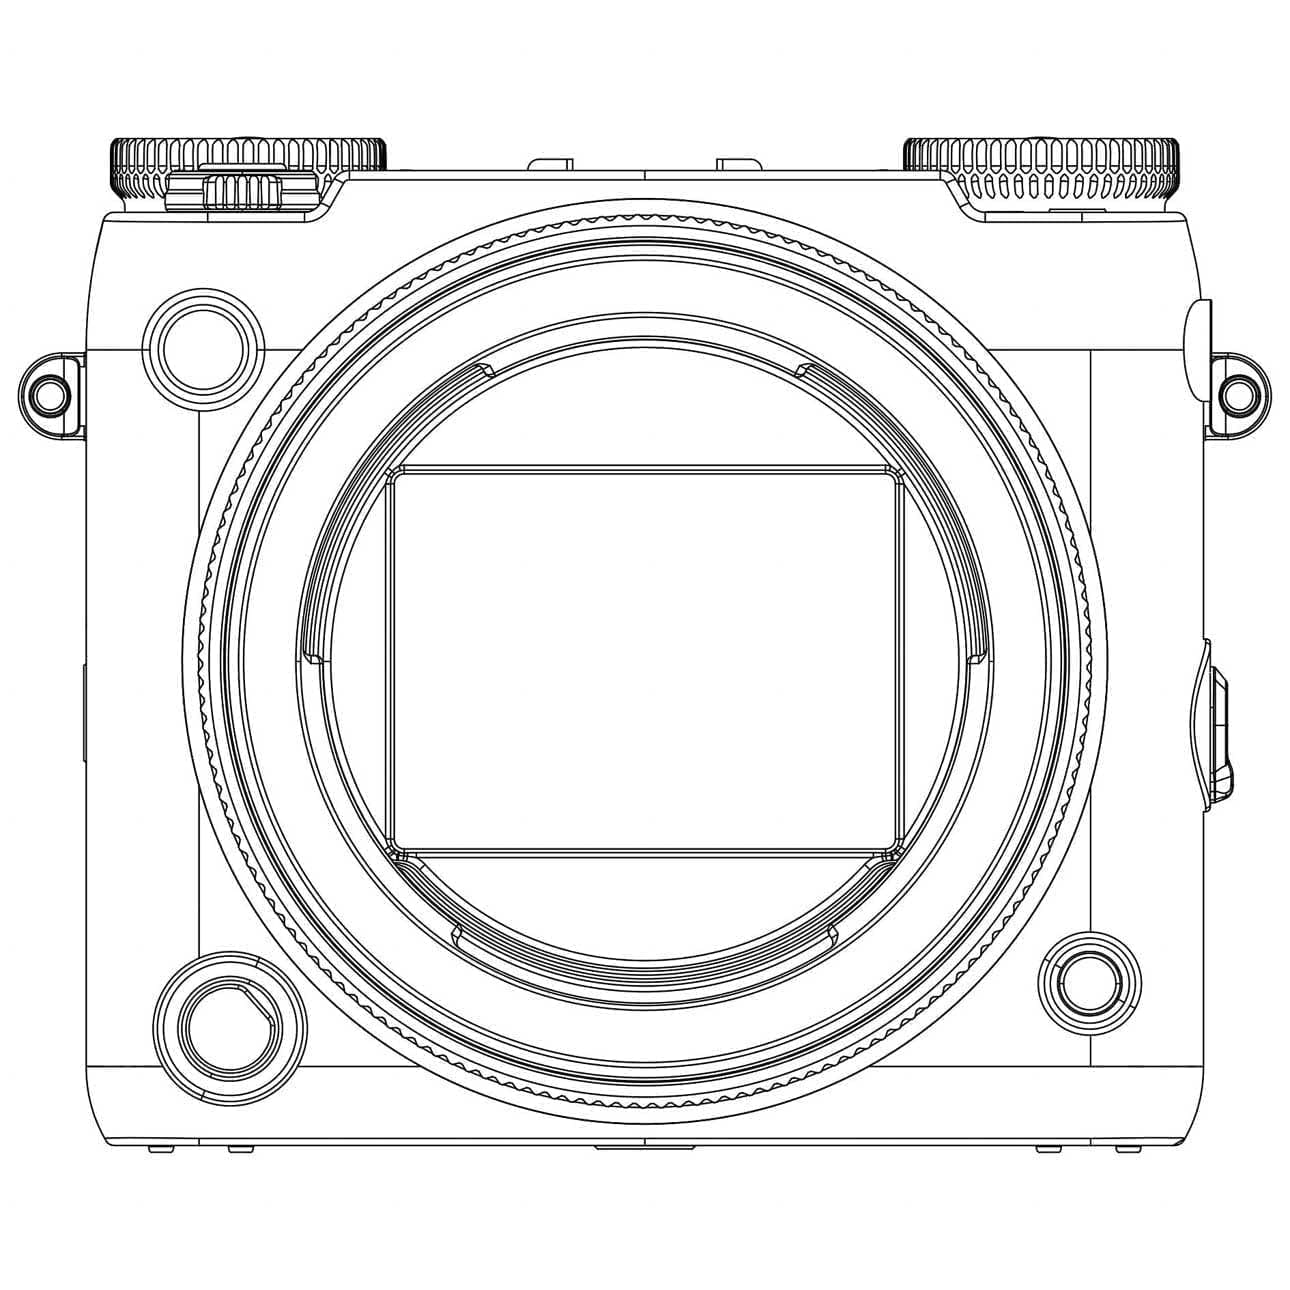 Is Fujifilm developing a budget modular GFX camera?